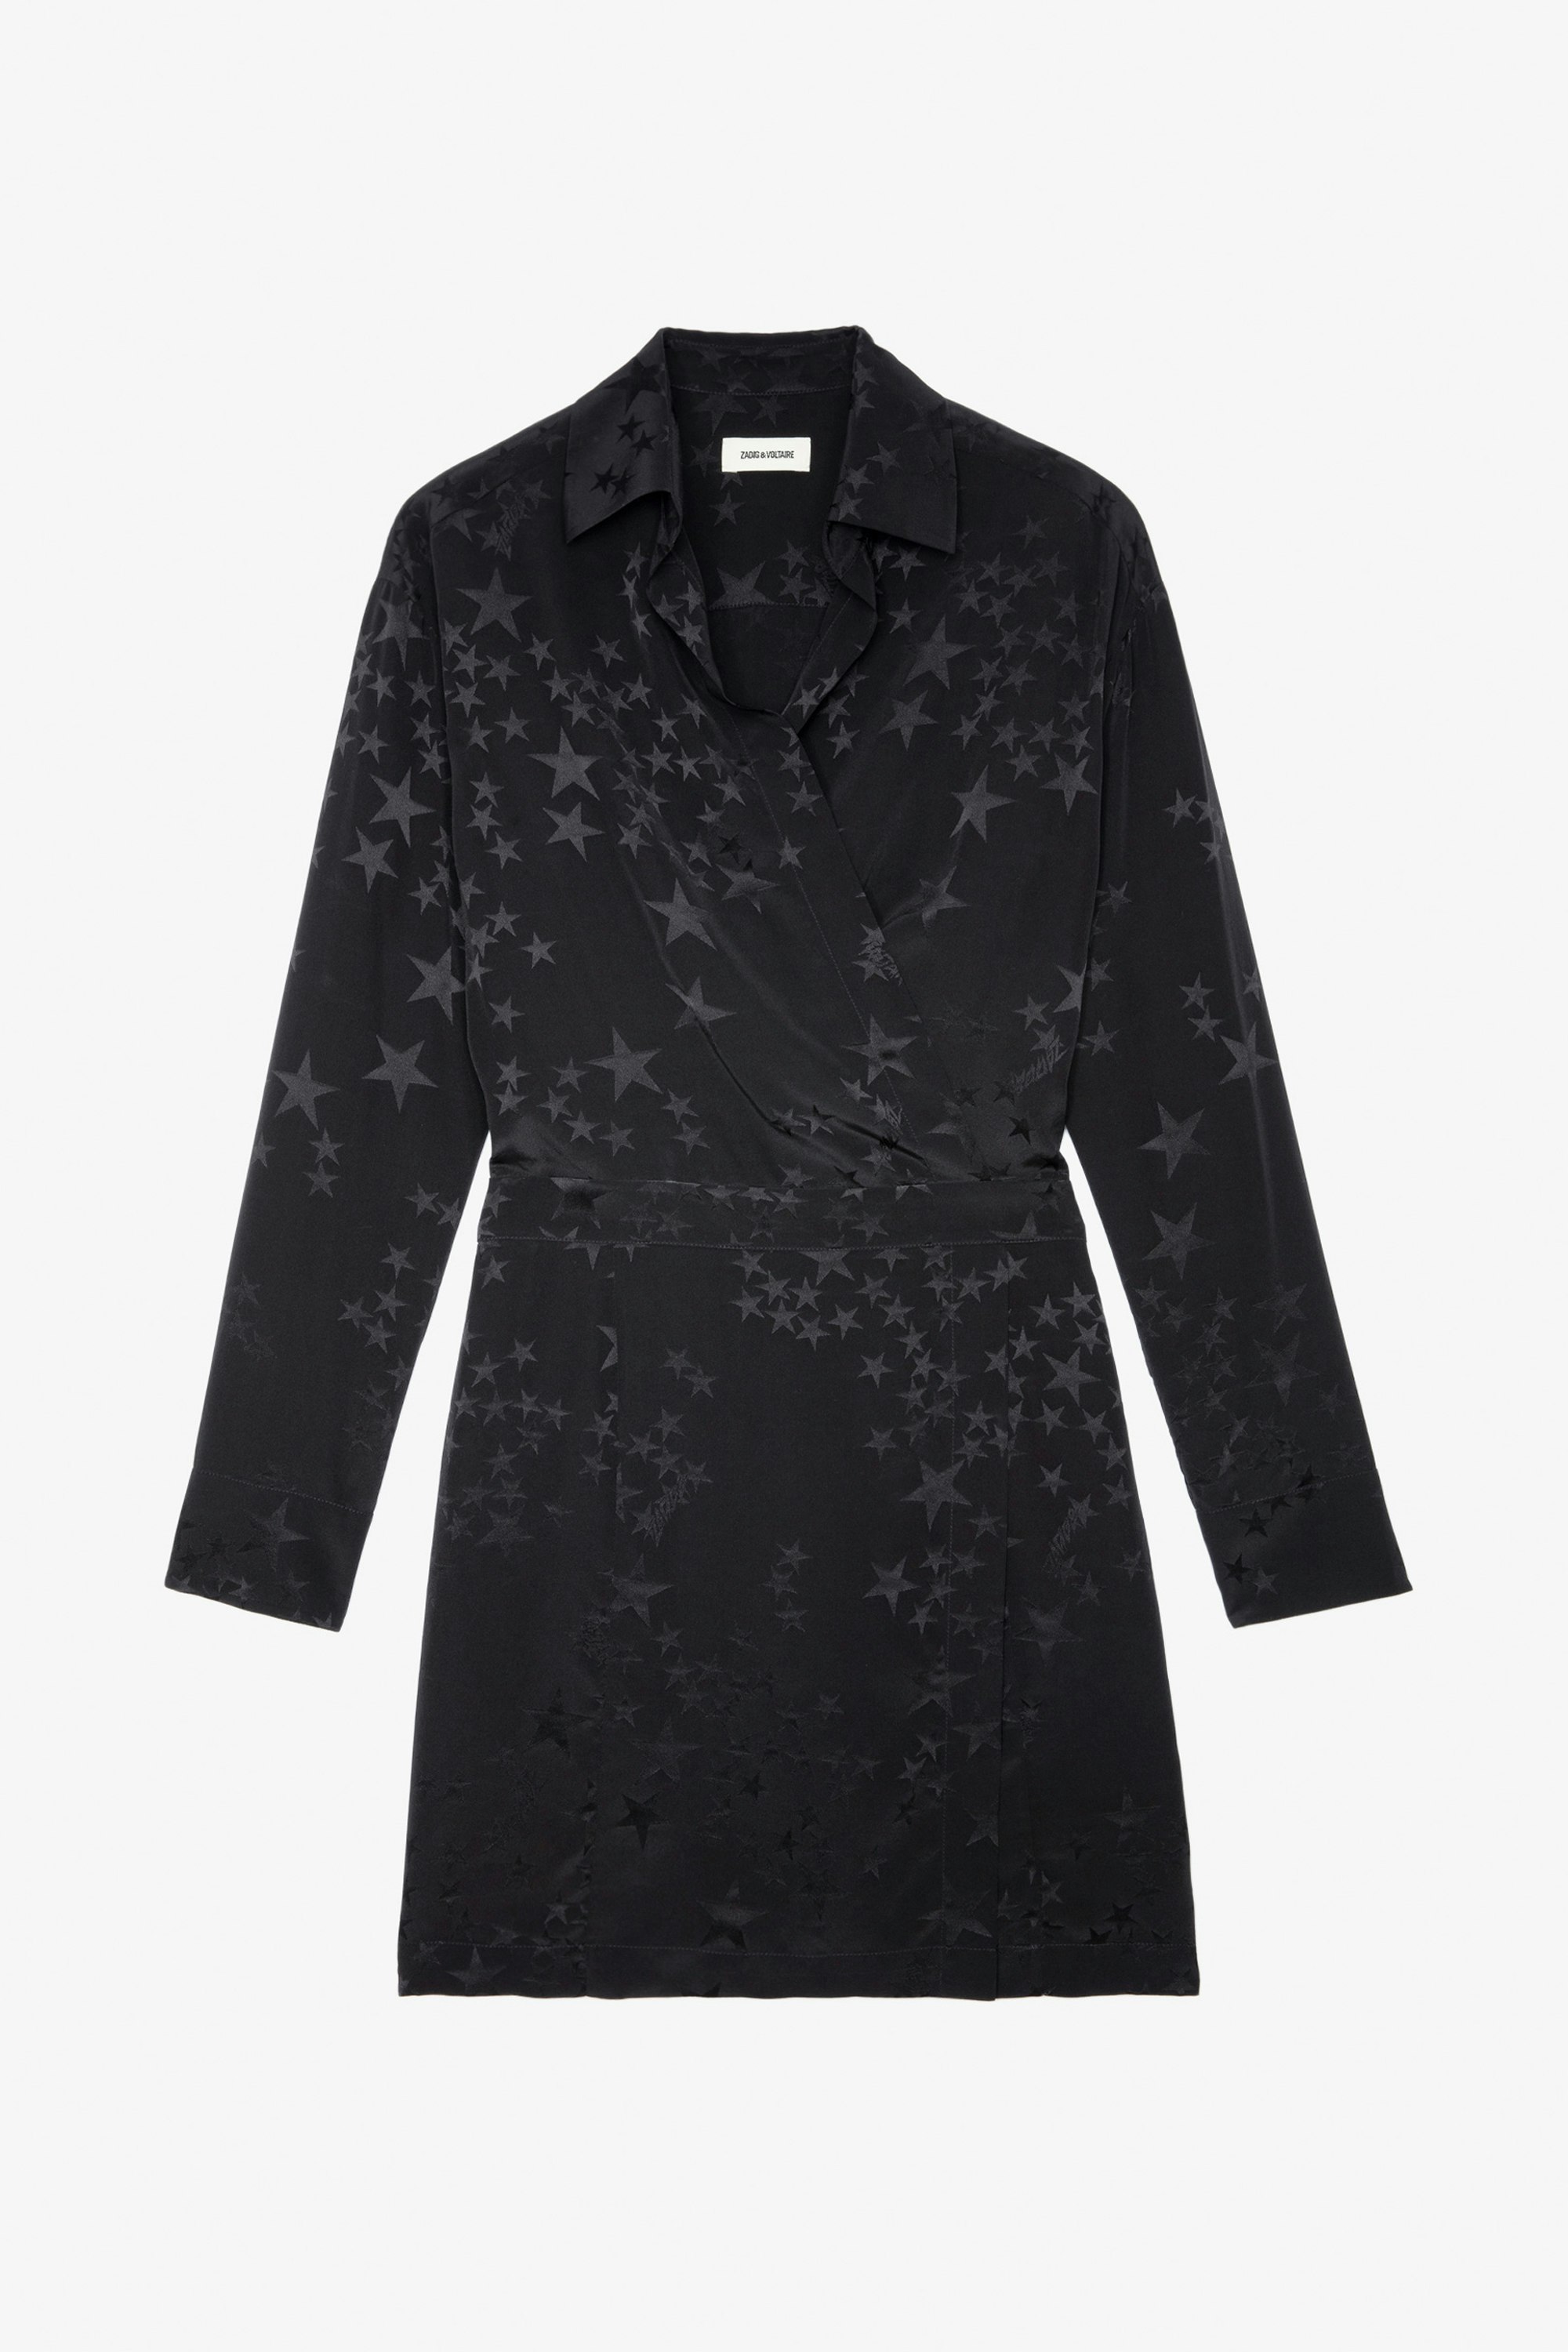 Ravy Silk Jacquard Dress - Women’s short black silk dress in star-print jacquard.